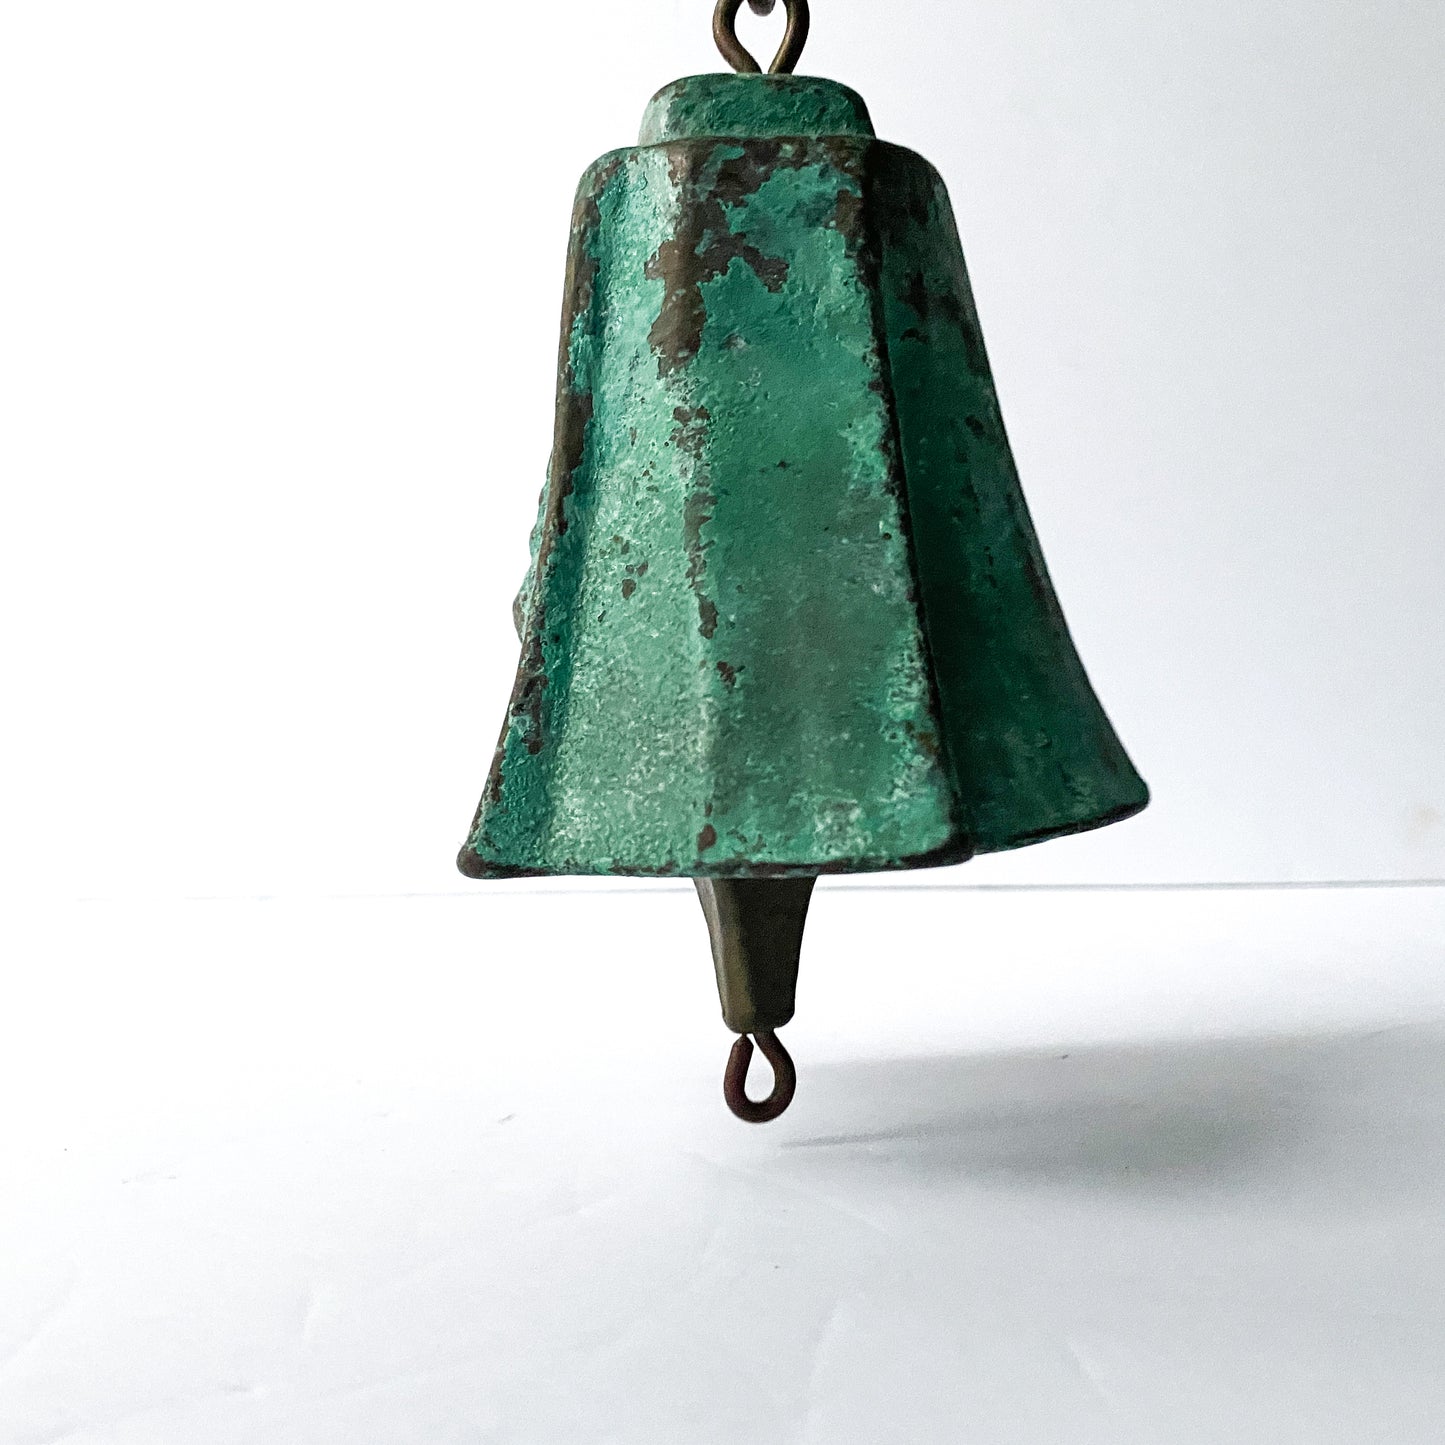 Vintage Bronze Wind Bell